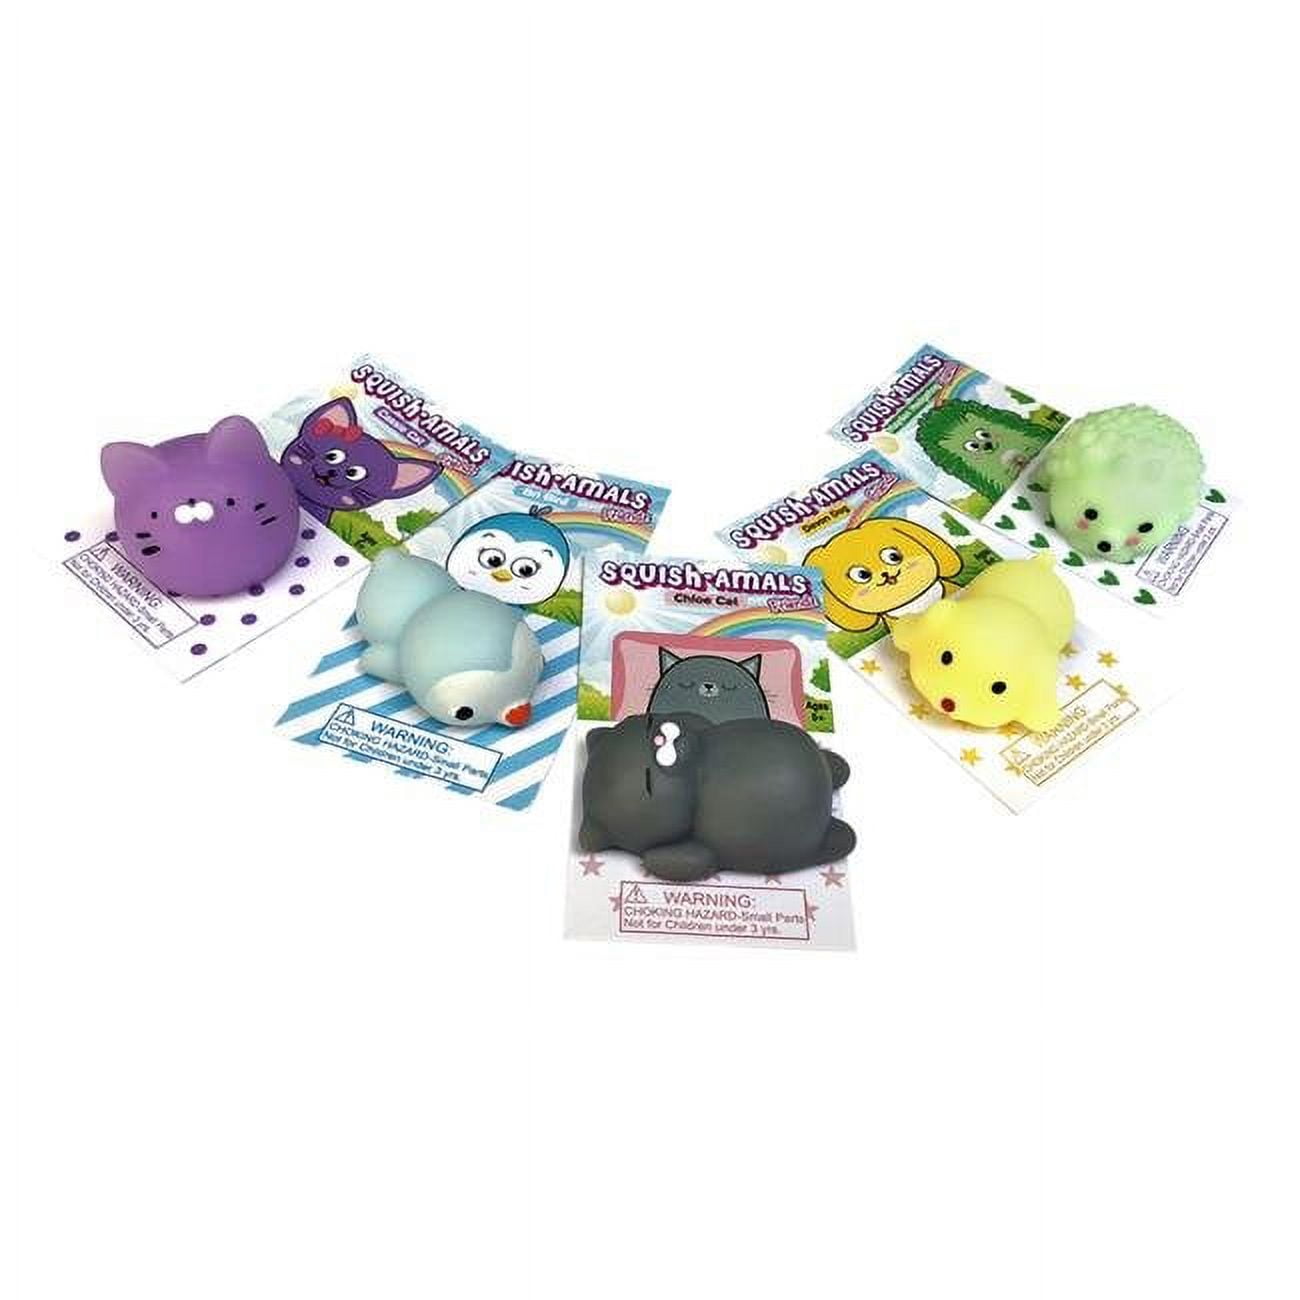 9010651 Squish-amals Friendz Squishy Animal Toy Plastic - Pack Of 20